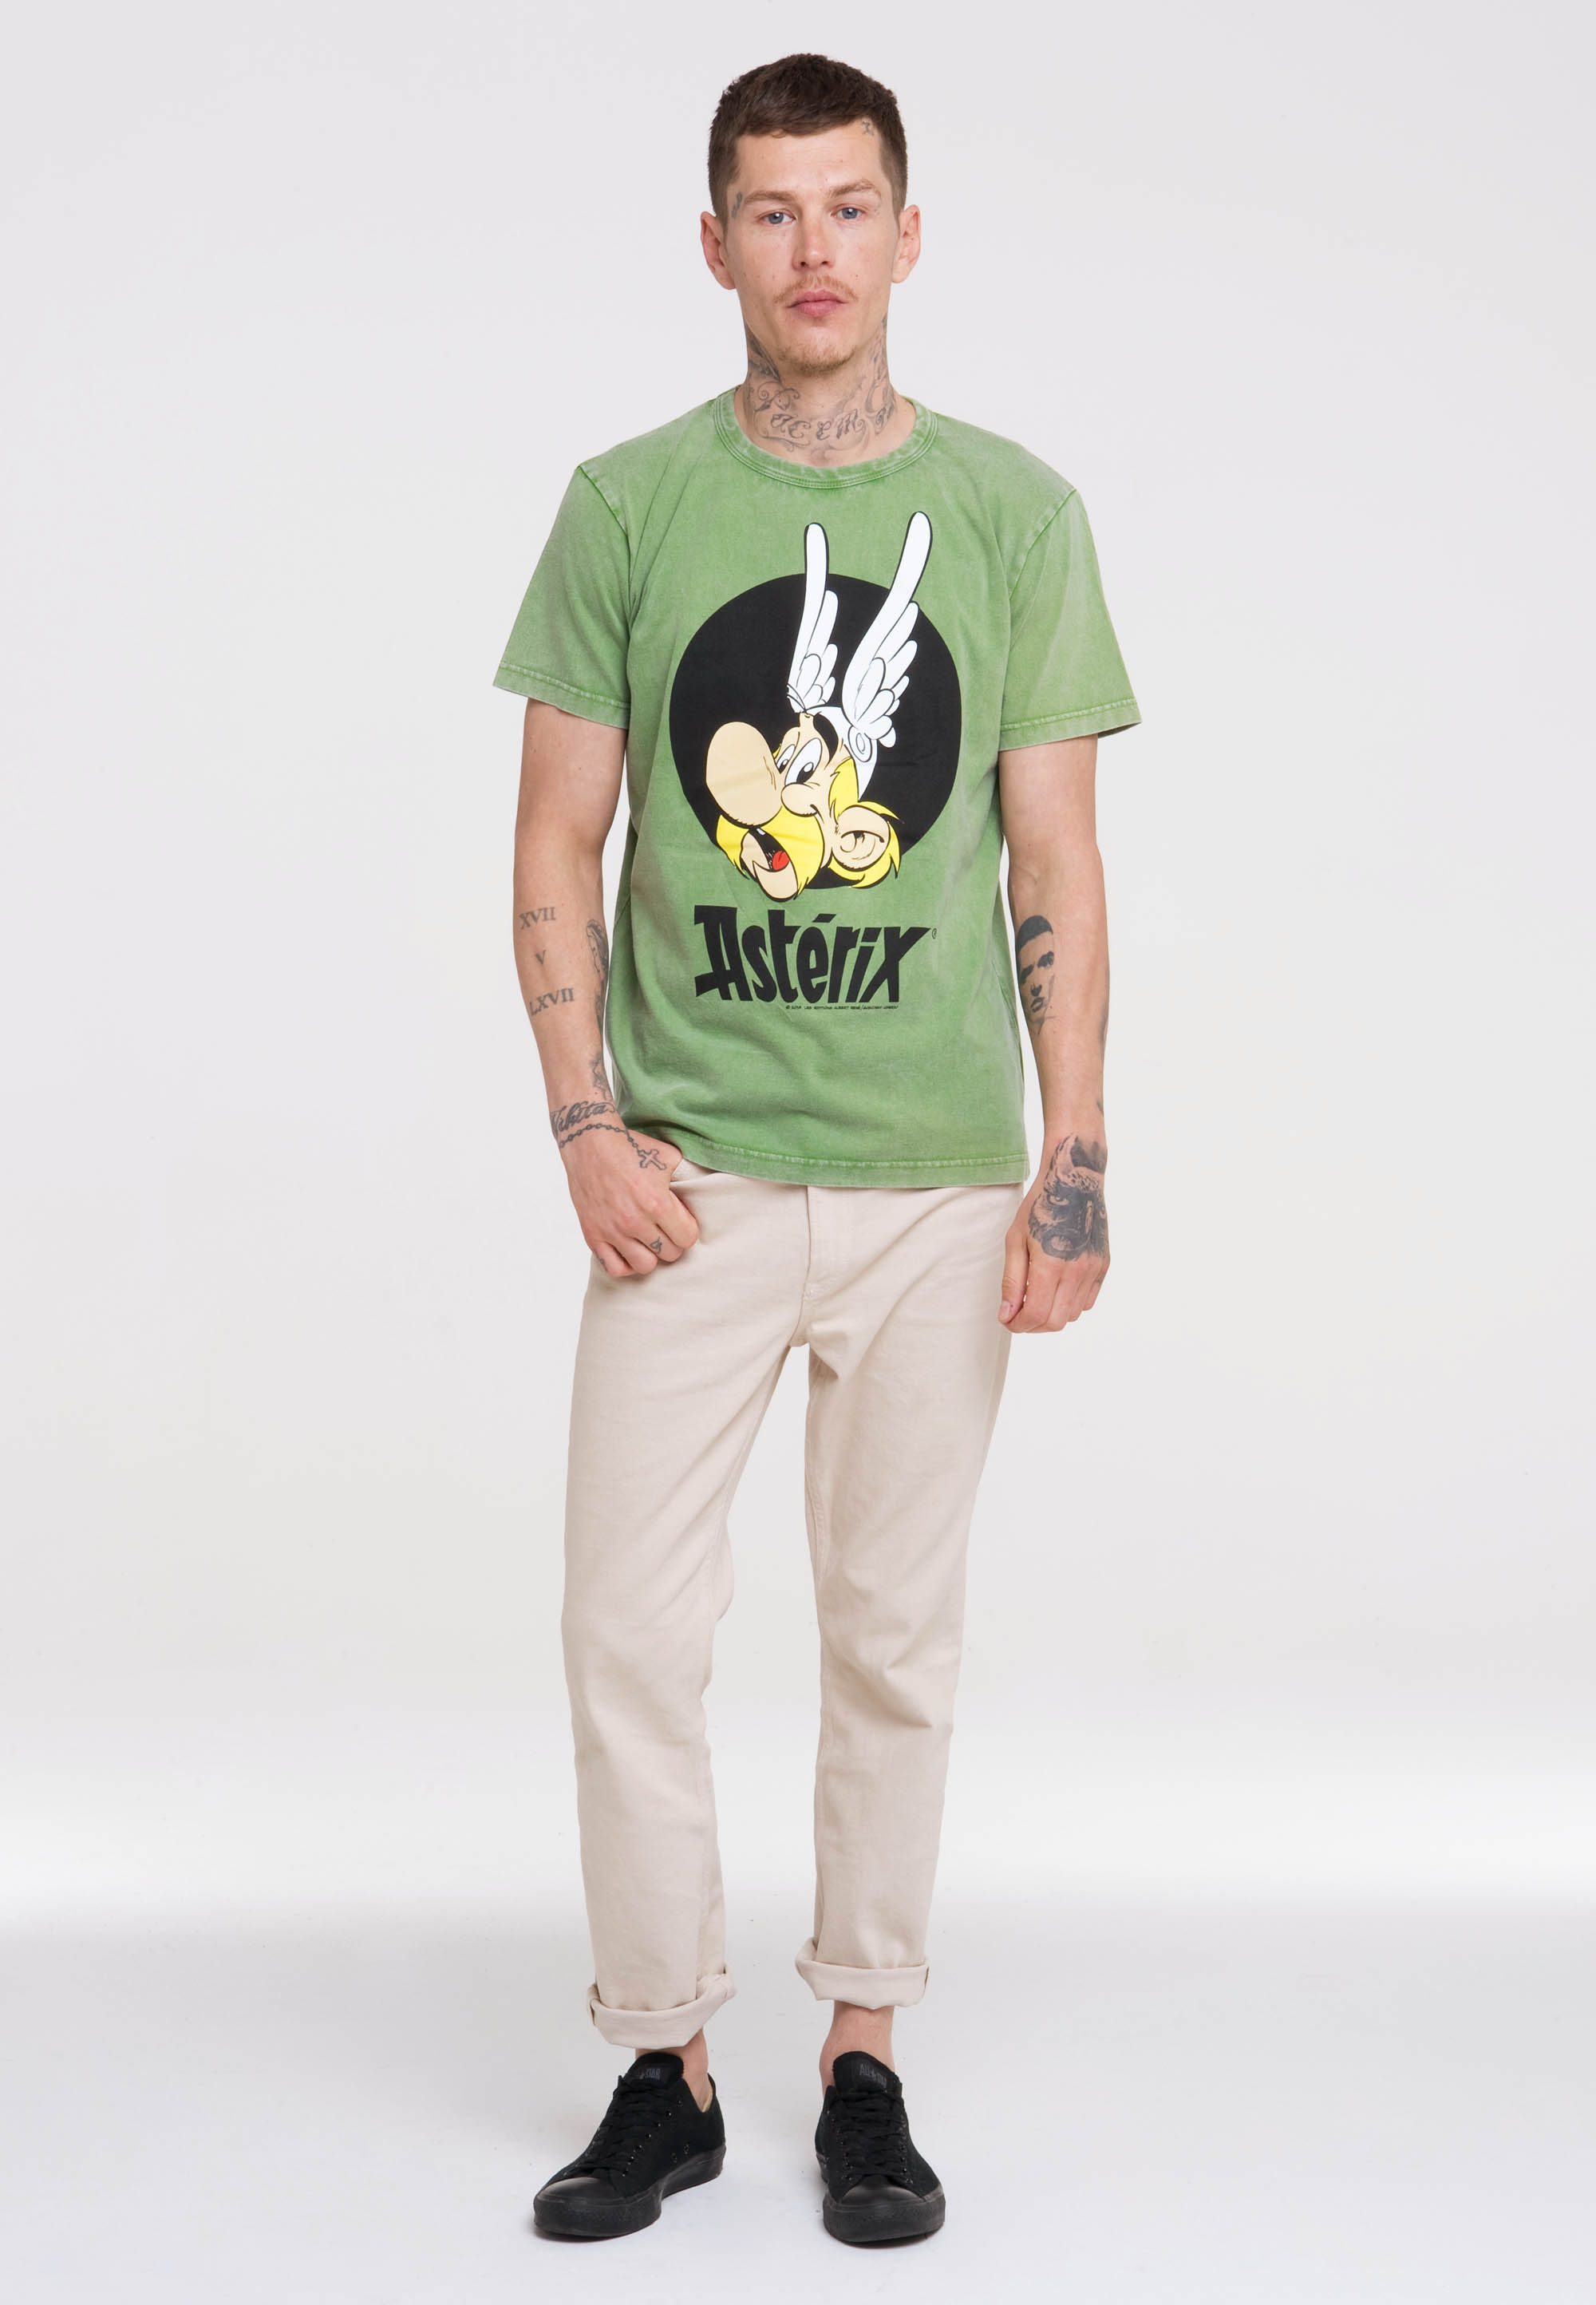 100% Portrait (Khaki) Asterix Logoshirt® cotton | T-shirt eBay